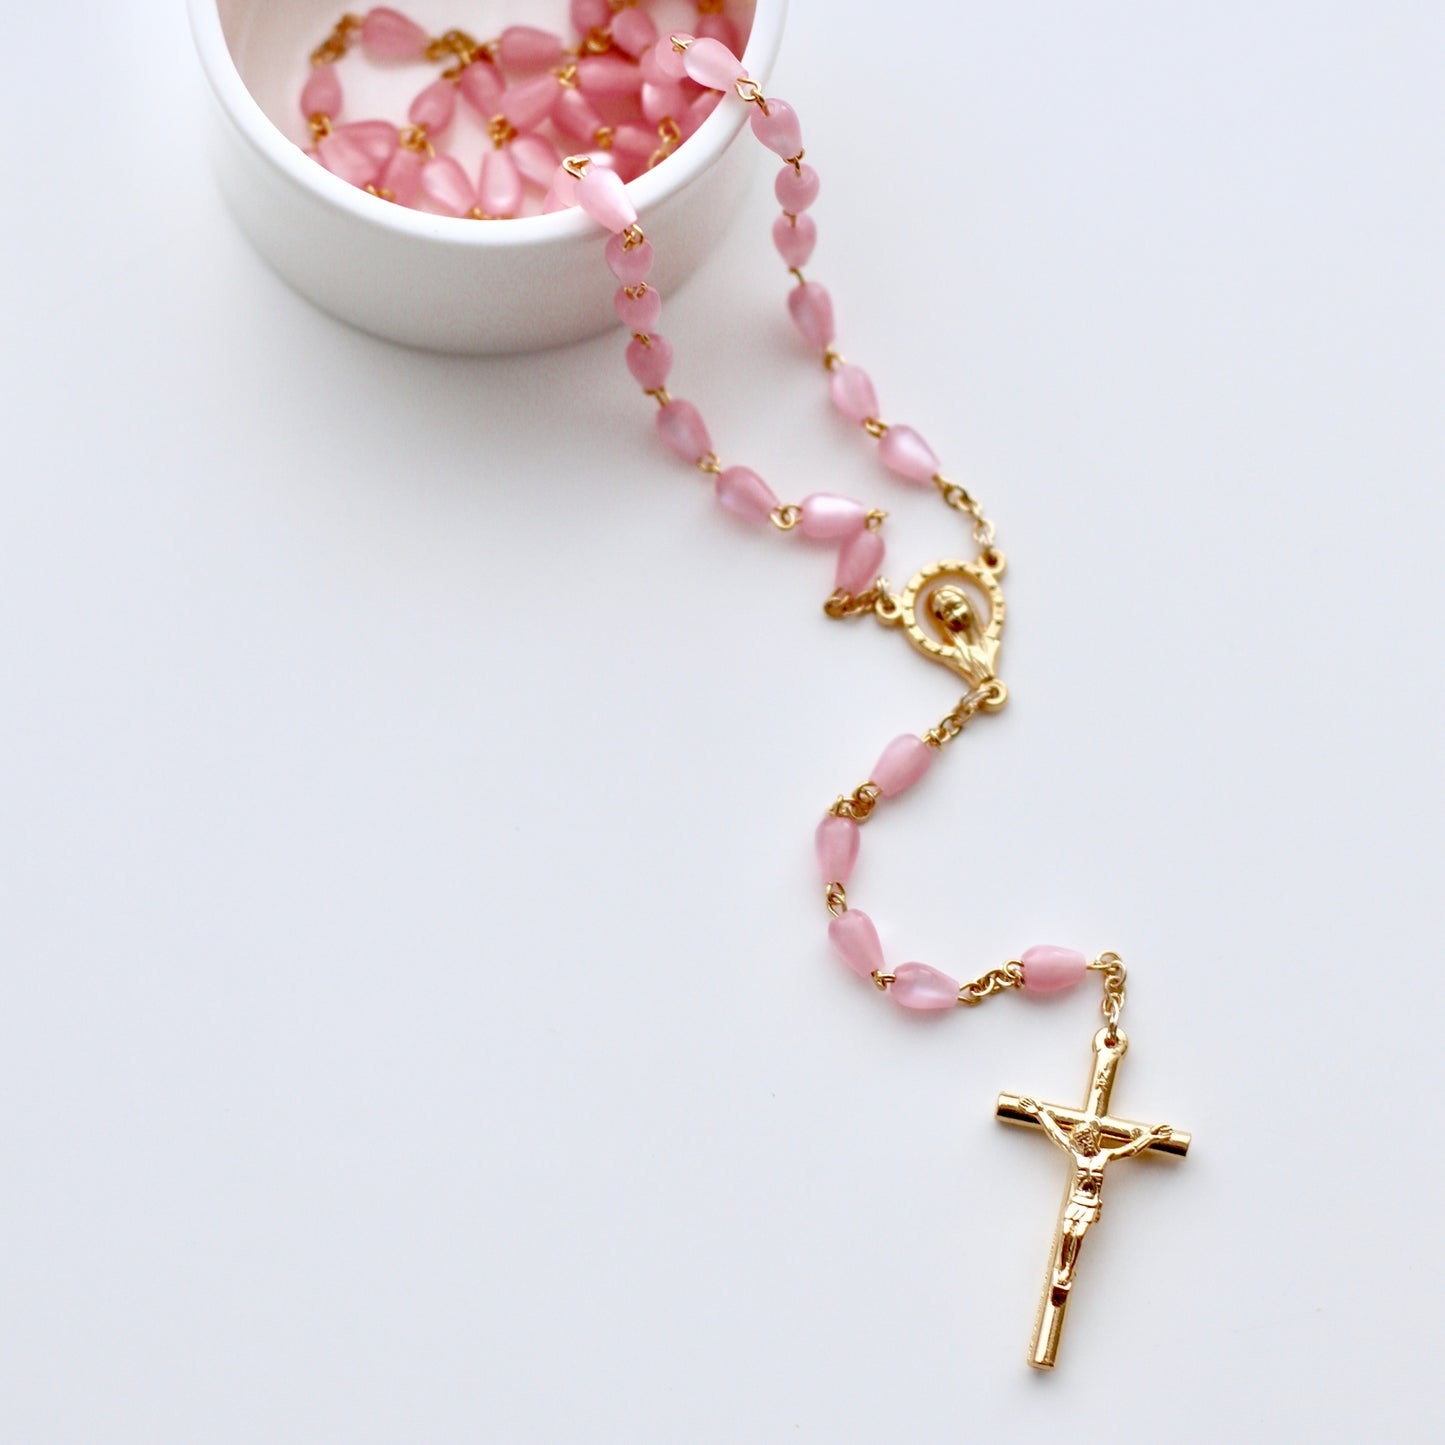 Teardrop Rosary w/ Gold Hardware - Imitation Teardrop Pearl and Gold Chain.